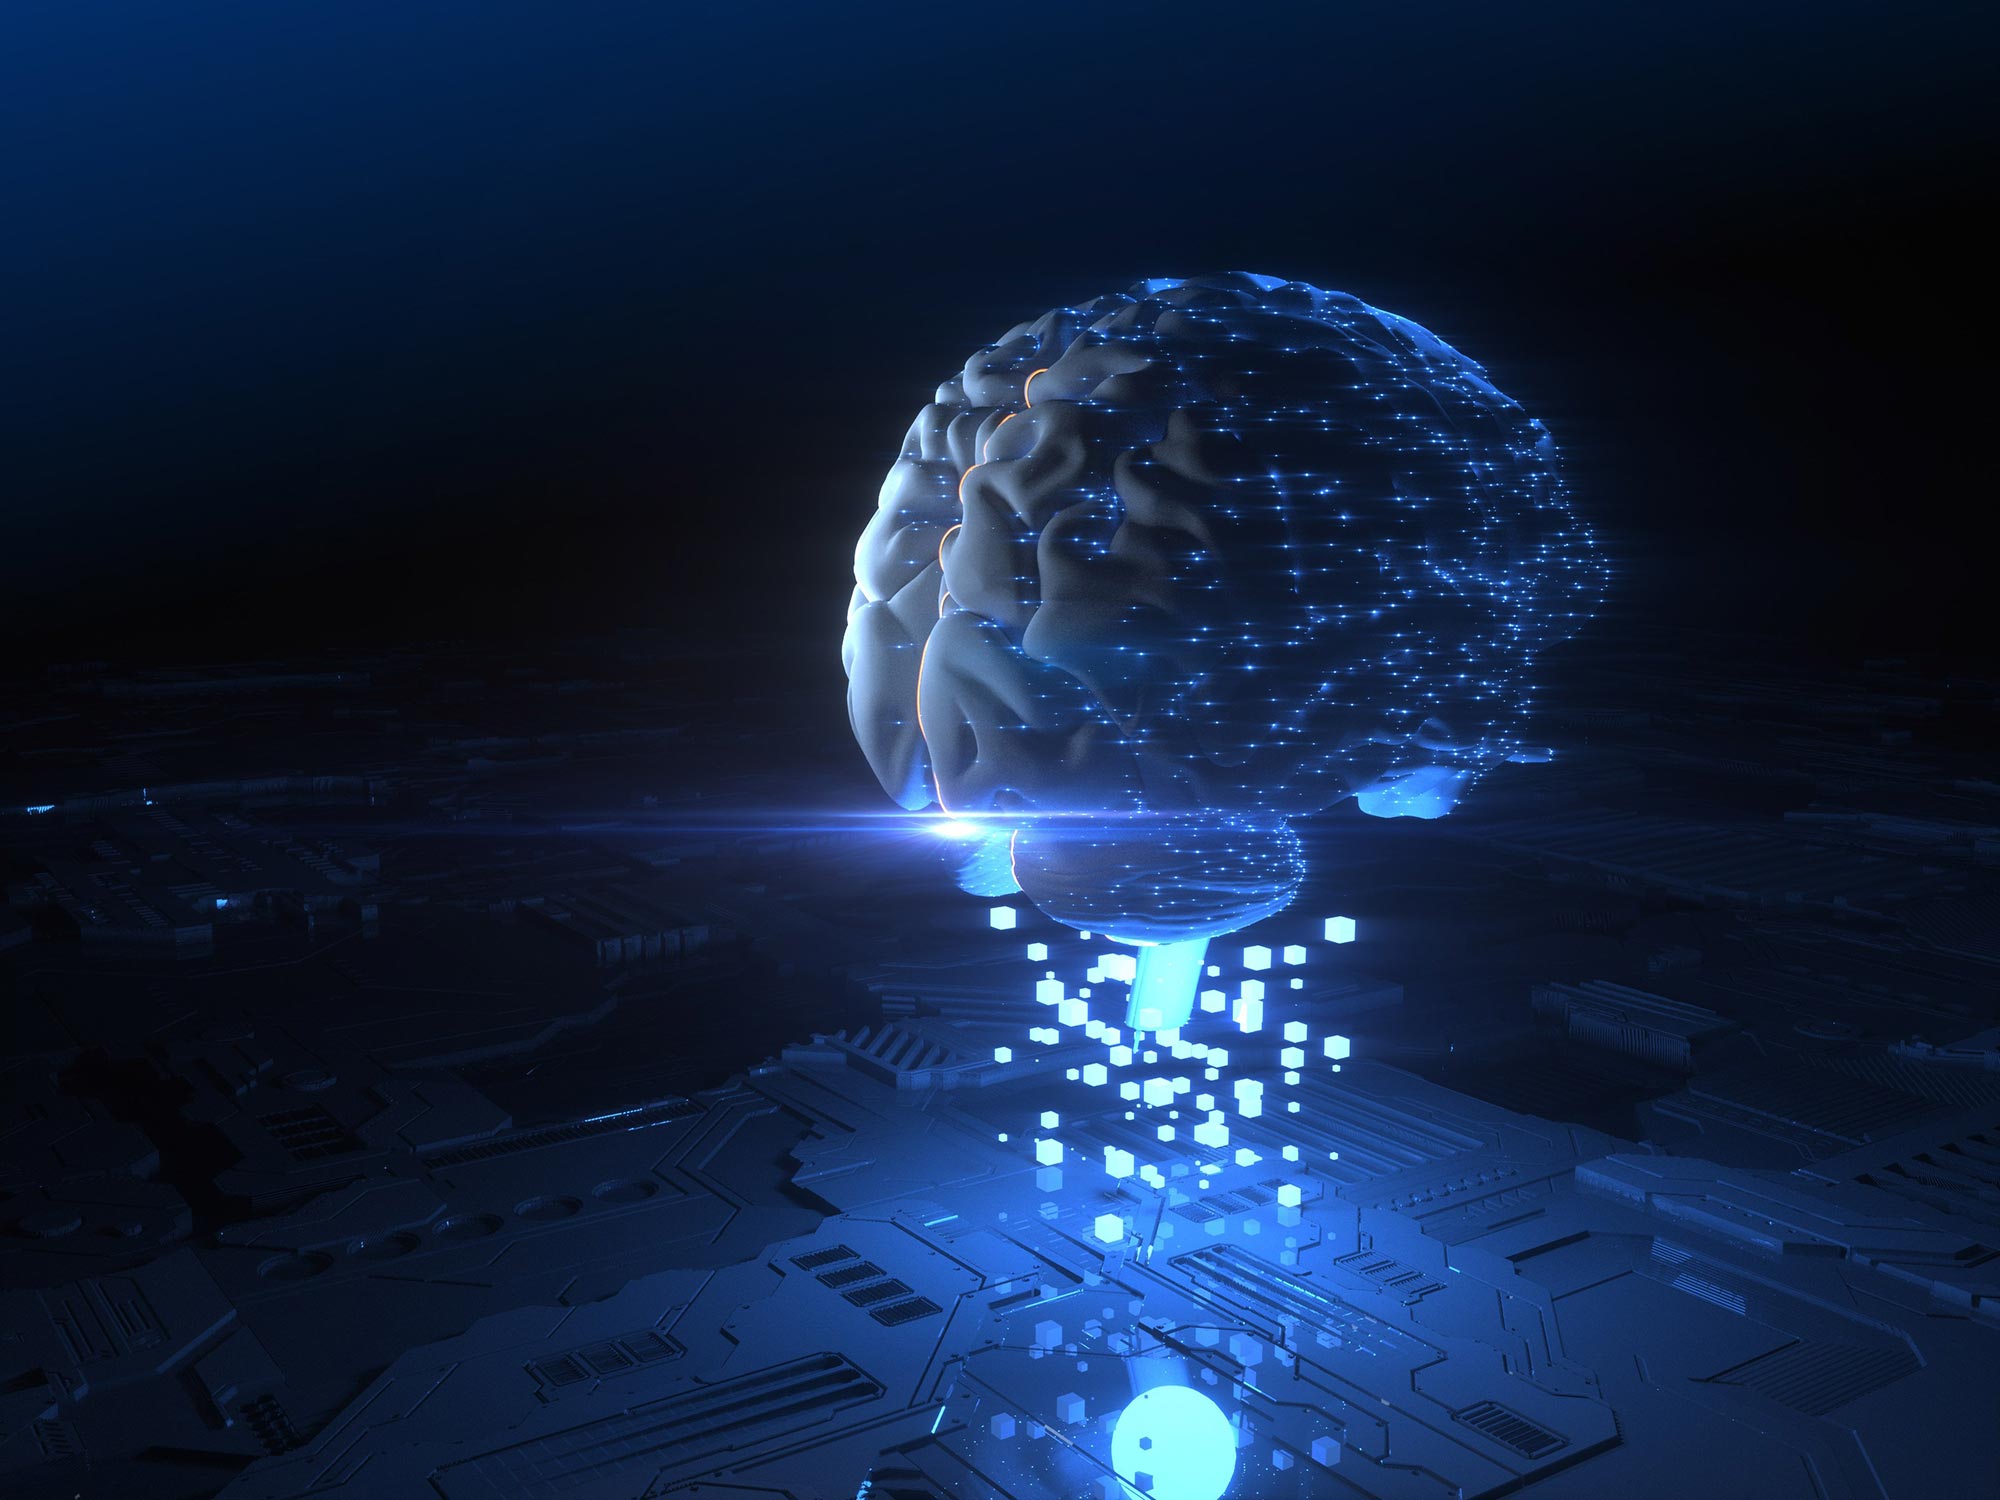 Scientists Shine a Light Into the “Black Box” of AI